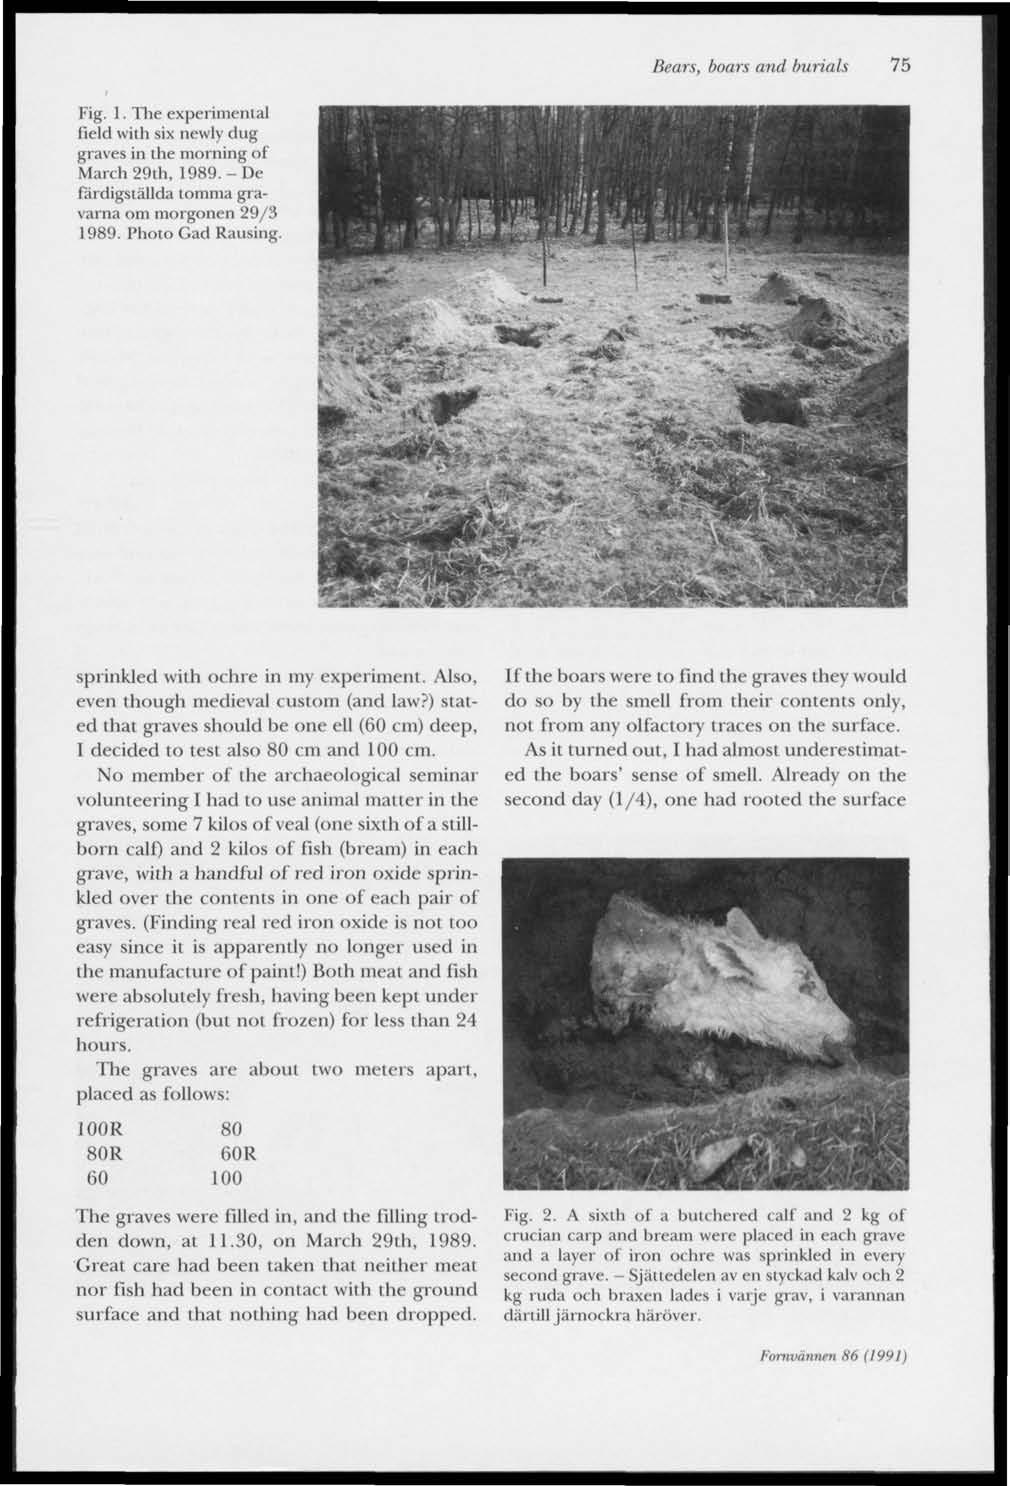 Bears, boars and burials 75 Fig. 1. The experimental field with six newly dug graves in the morning of Mardi 29th, 1989.-De färdigställda lomma gravarna om morgonen 29/3 1989. Photo Gad Rausing.